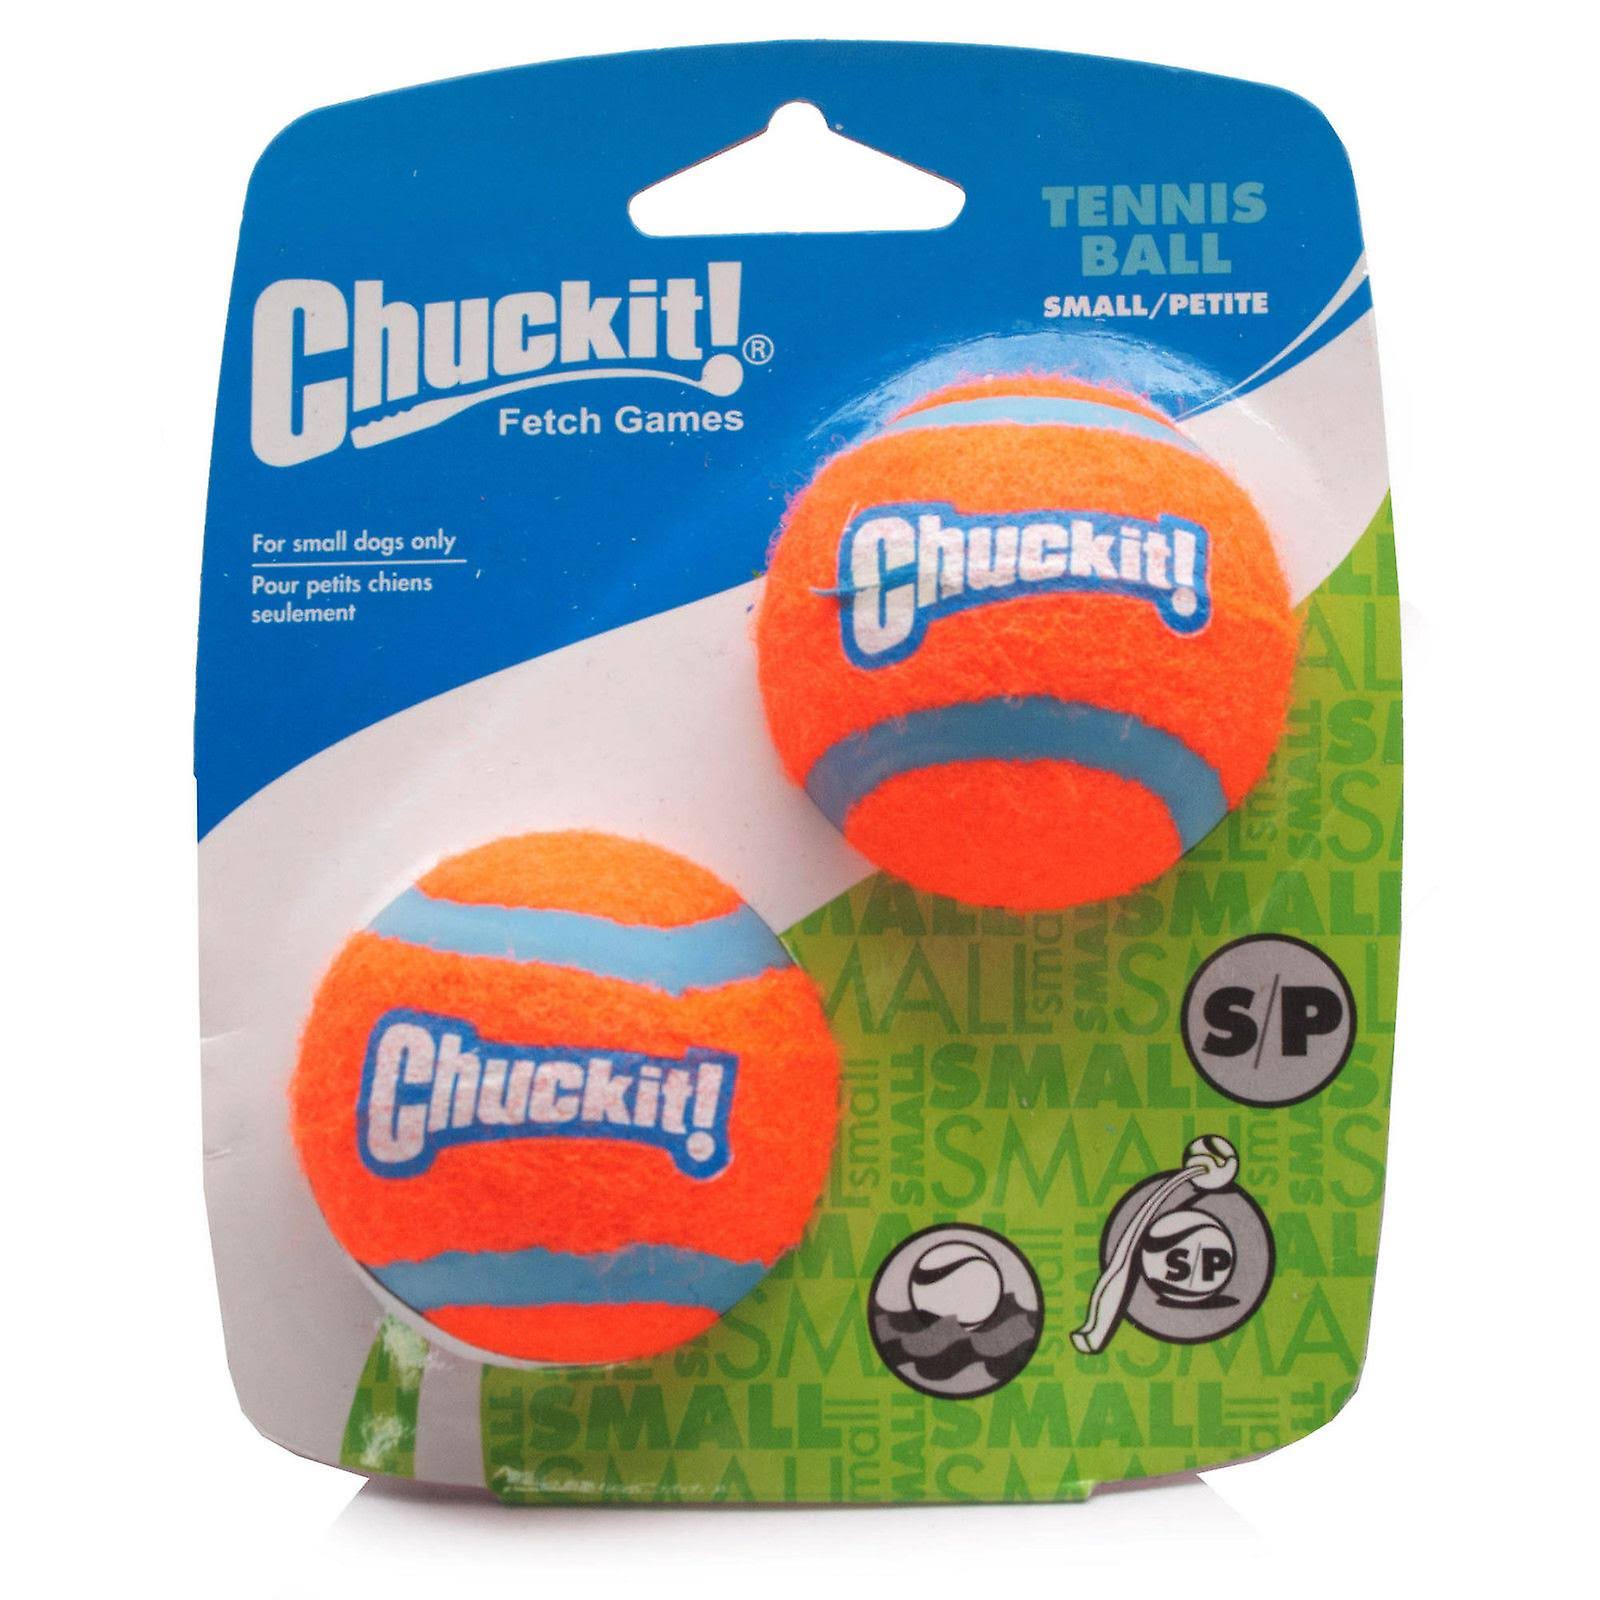 Chuckit! Tennis Ball - Small